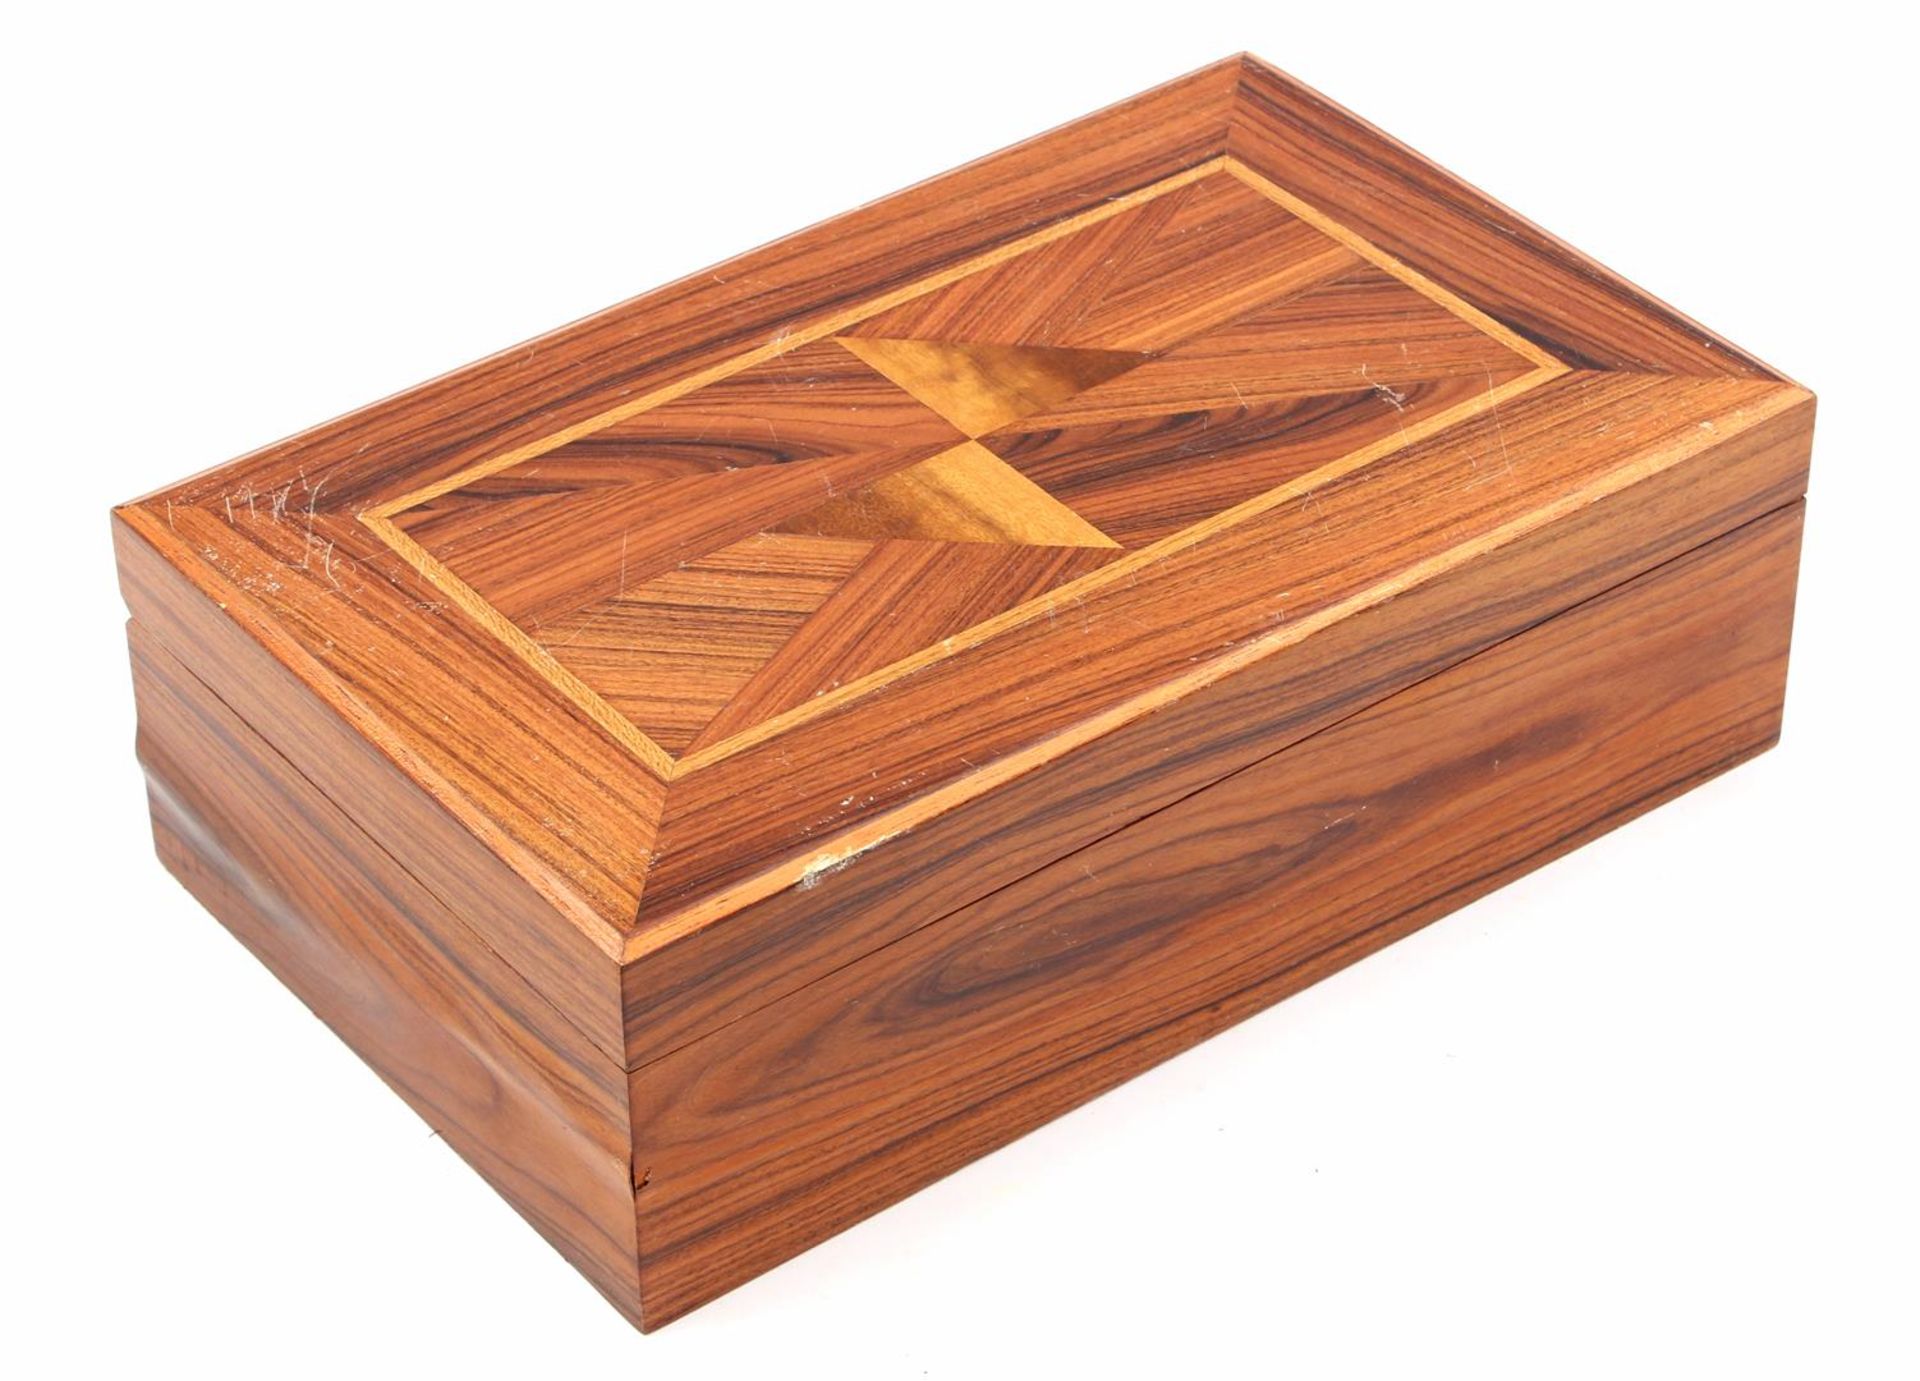 Wooden cigar box - Image 2 of 2